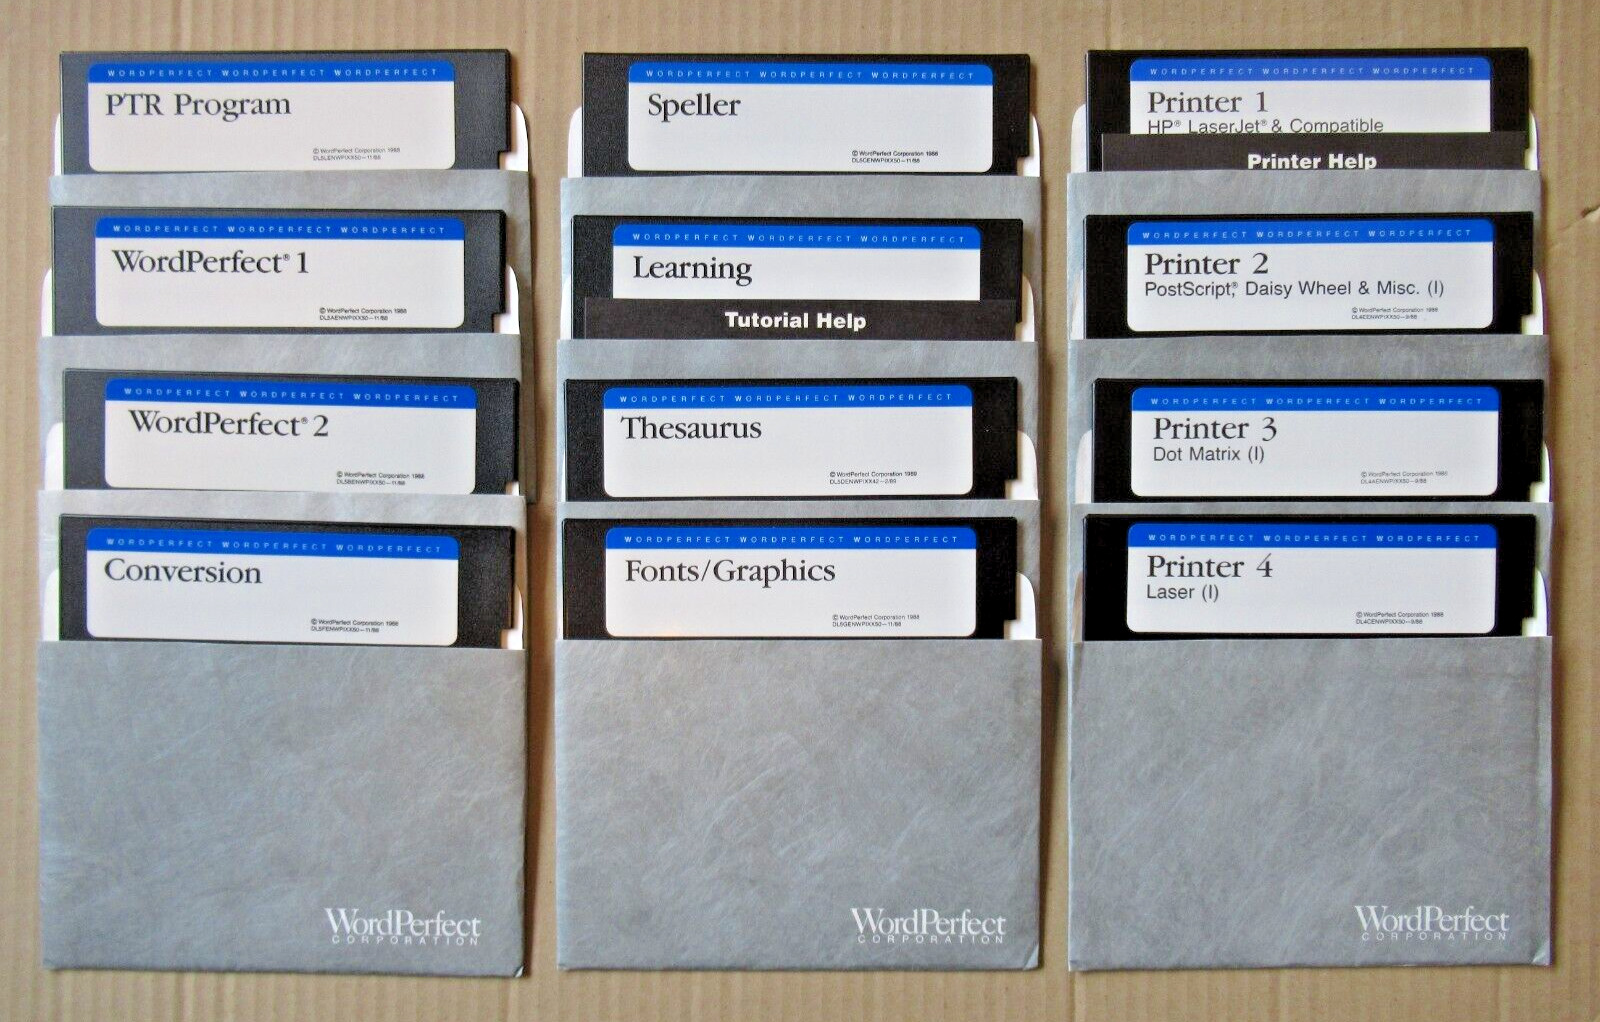 WORD PERFECT PROGRAM, Twelve 5-1/4 inch floppies disk, 1988